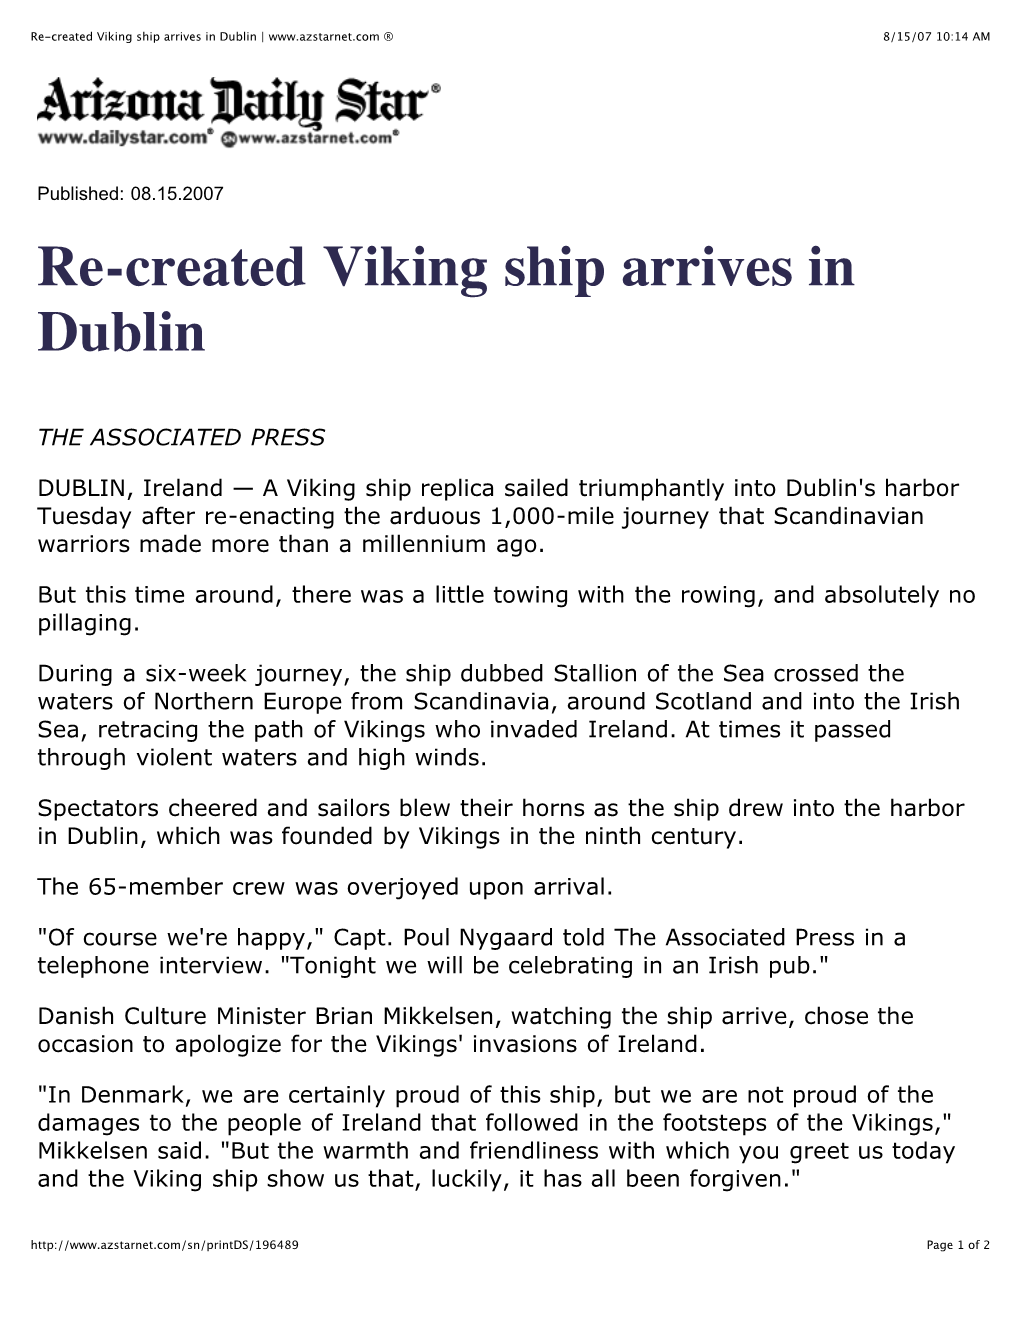 Re-Created Viking Ship Arrives in Dublin | ® 8/15/07 10:14 AM